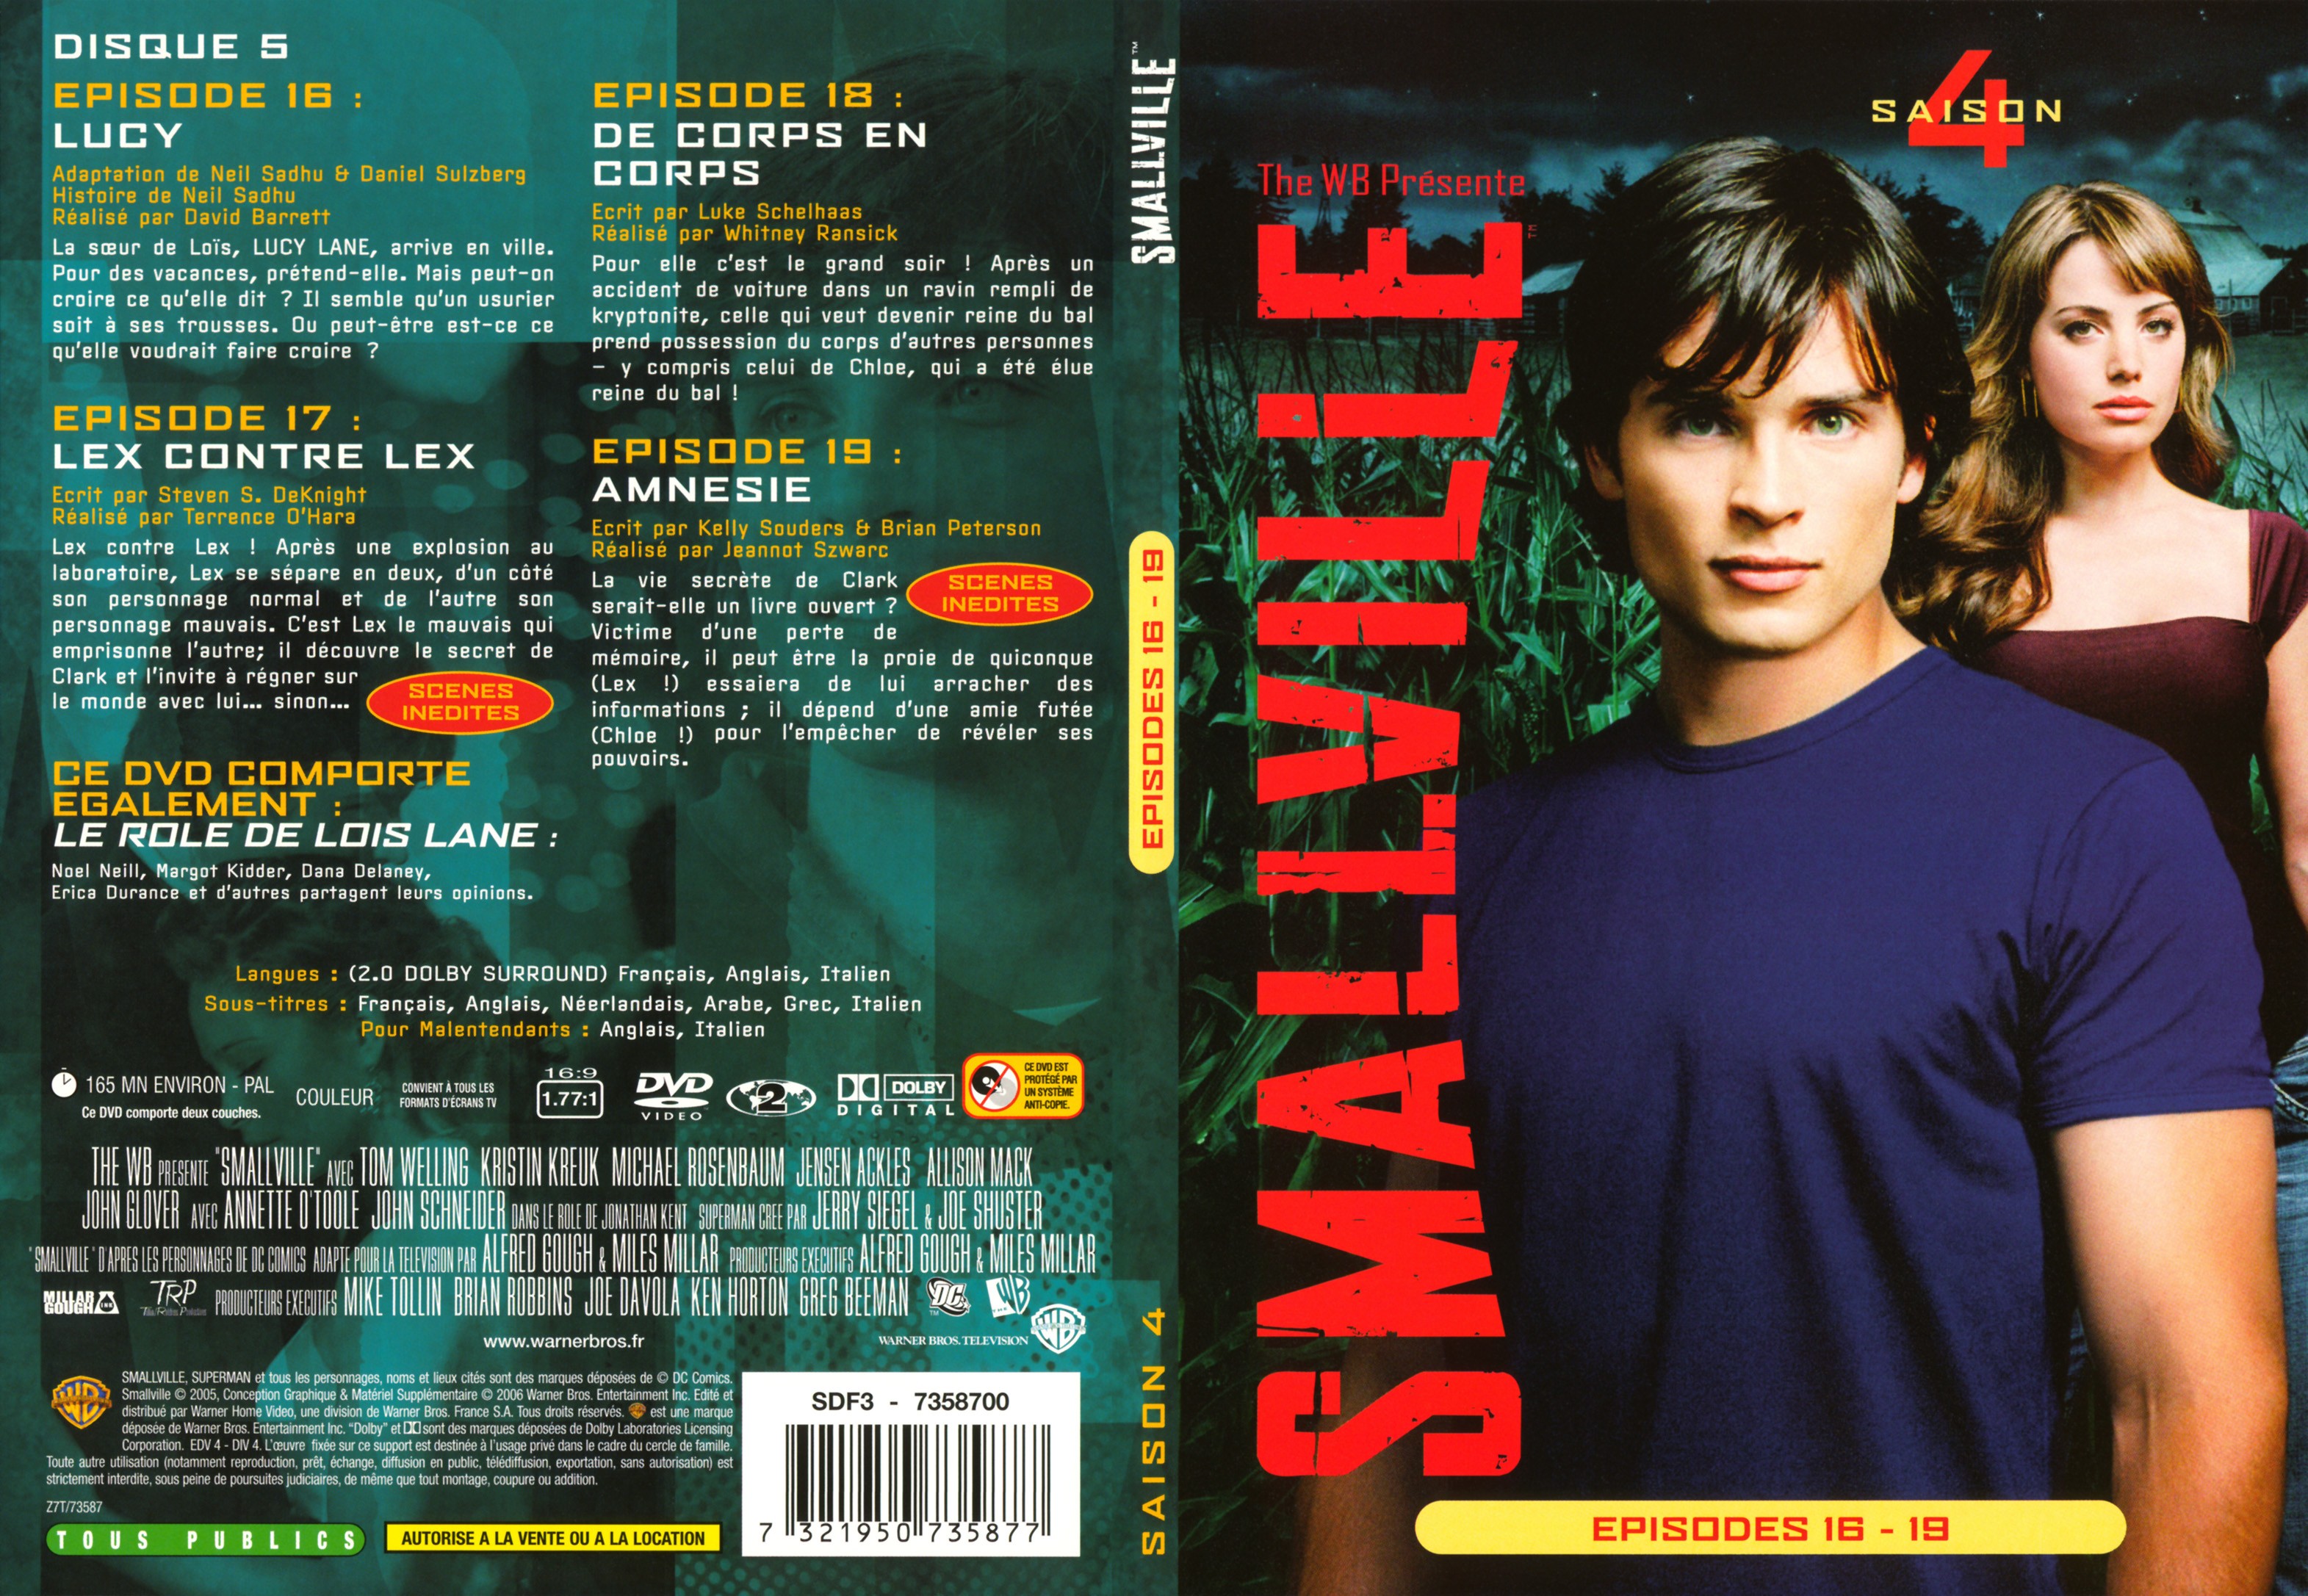 Jaquette DVD Smallville saison 4 DVD 5